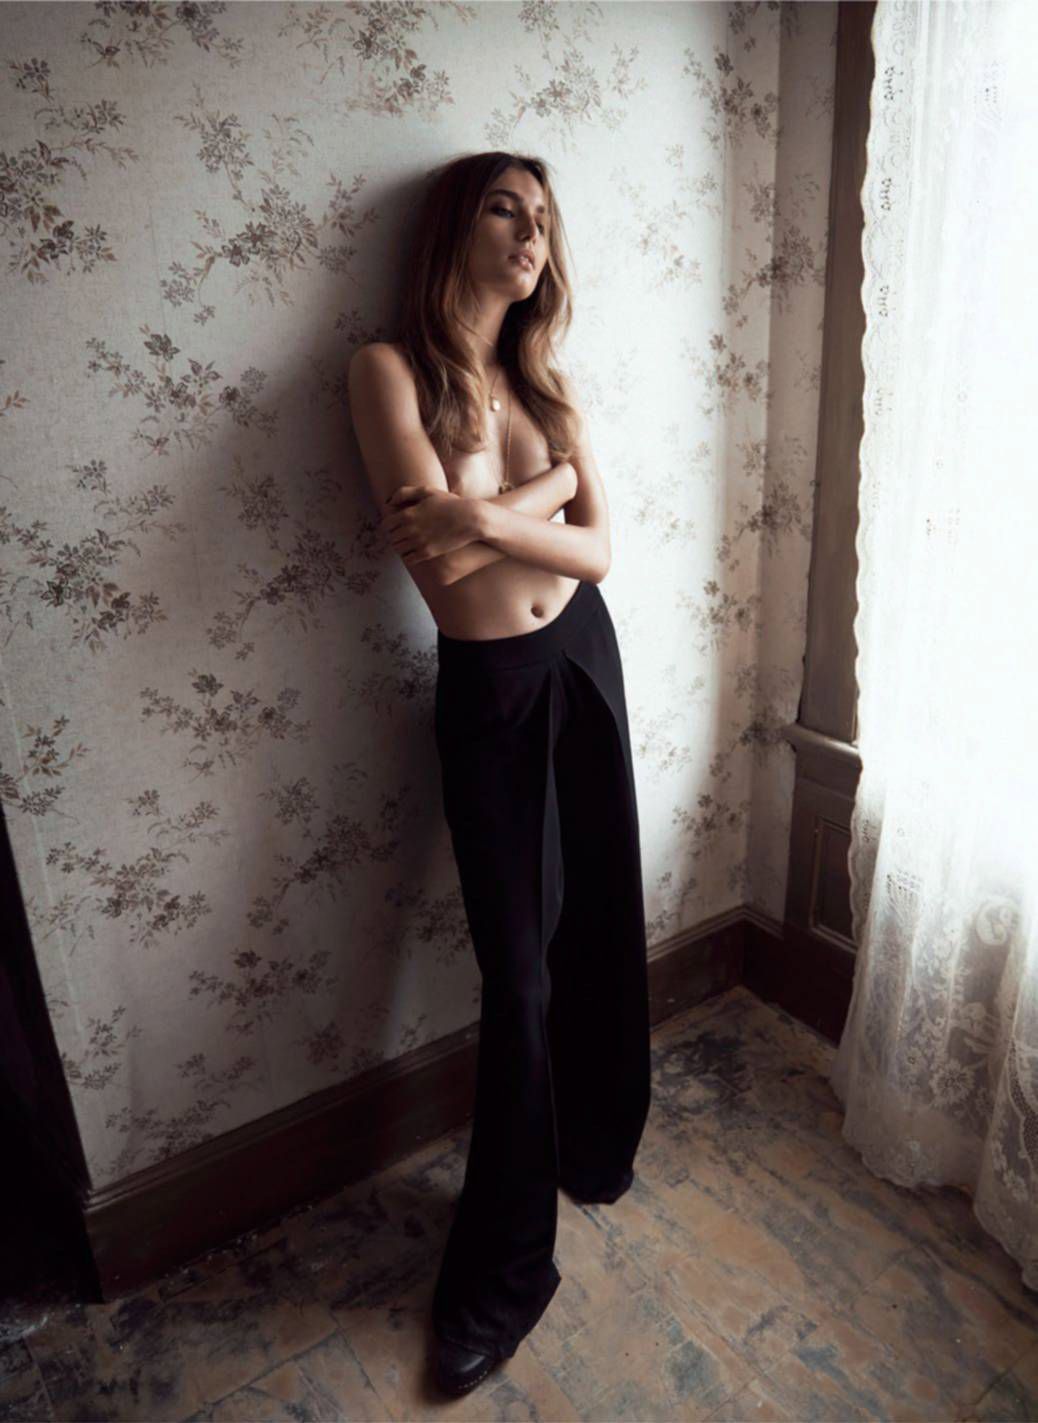 Topless Photos of Andreea Diaconu